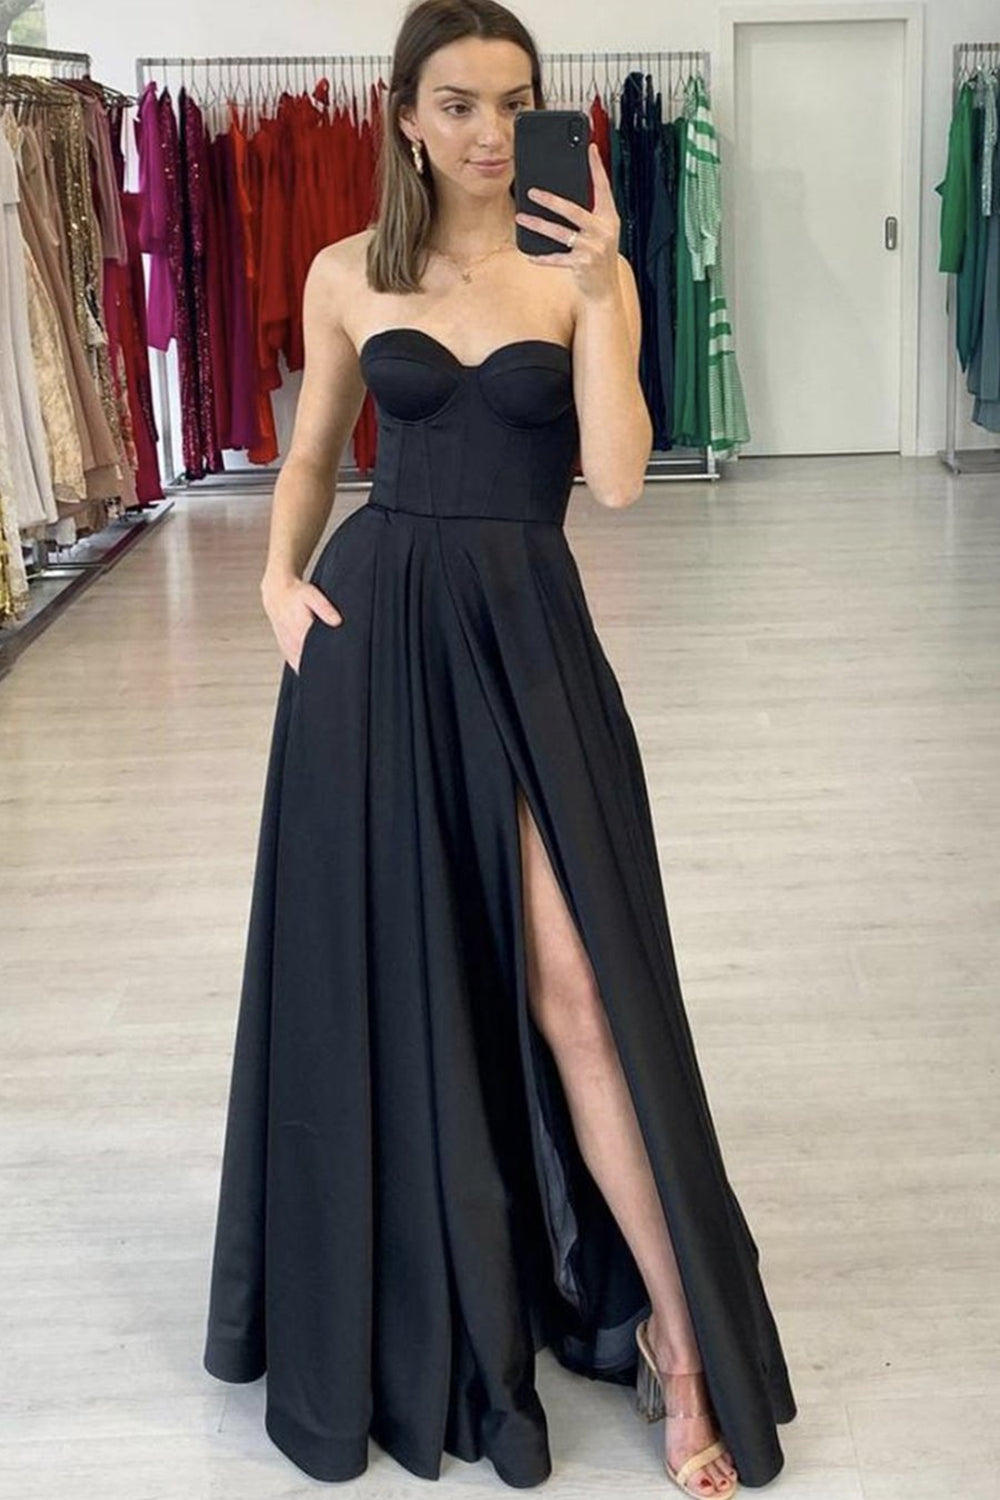 black formal dresses: Women's Formal Dresses & Evening Gowns | Dillard's